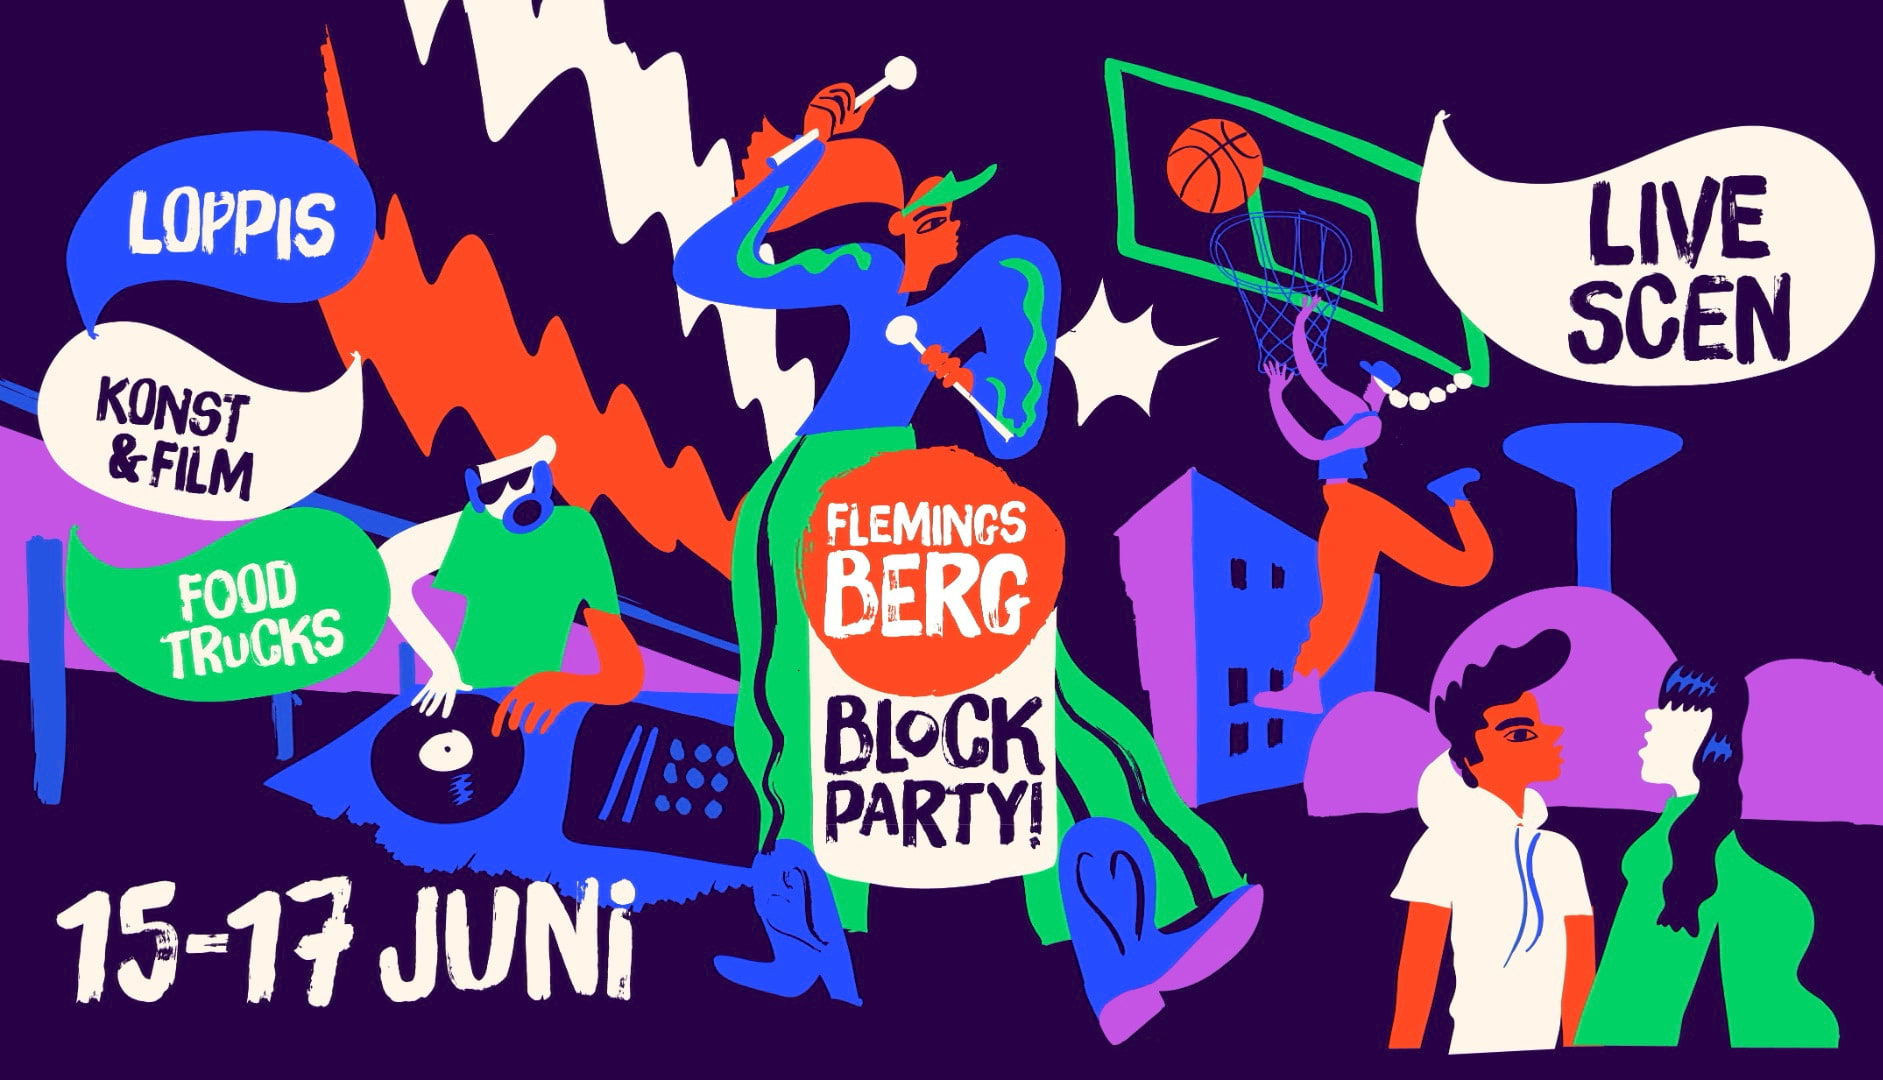 Flemingsberg Block Party – ny gatufestival